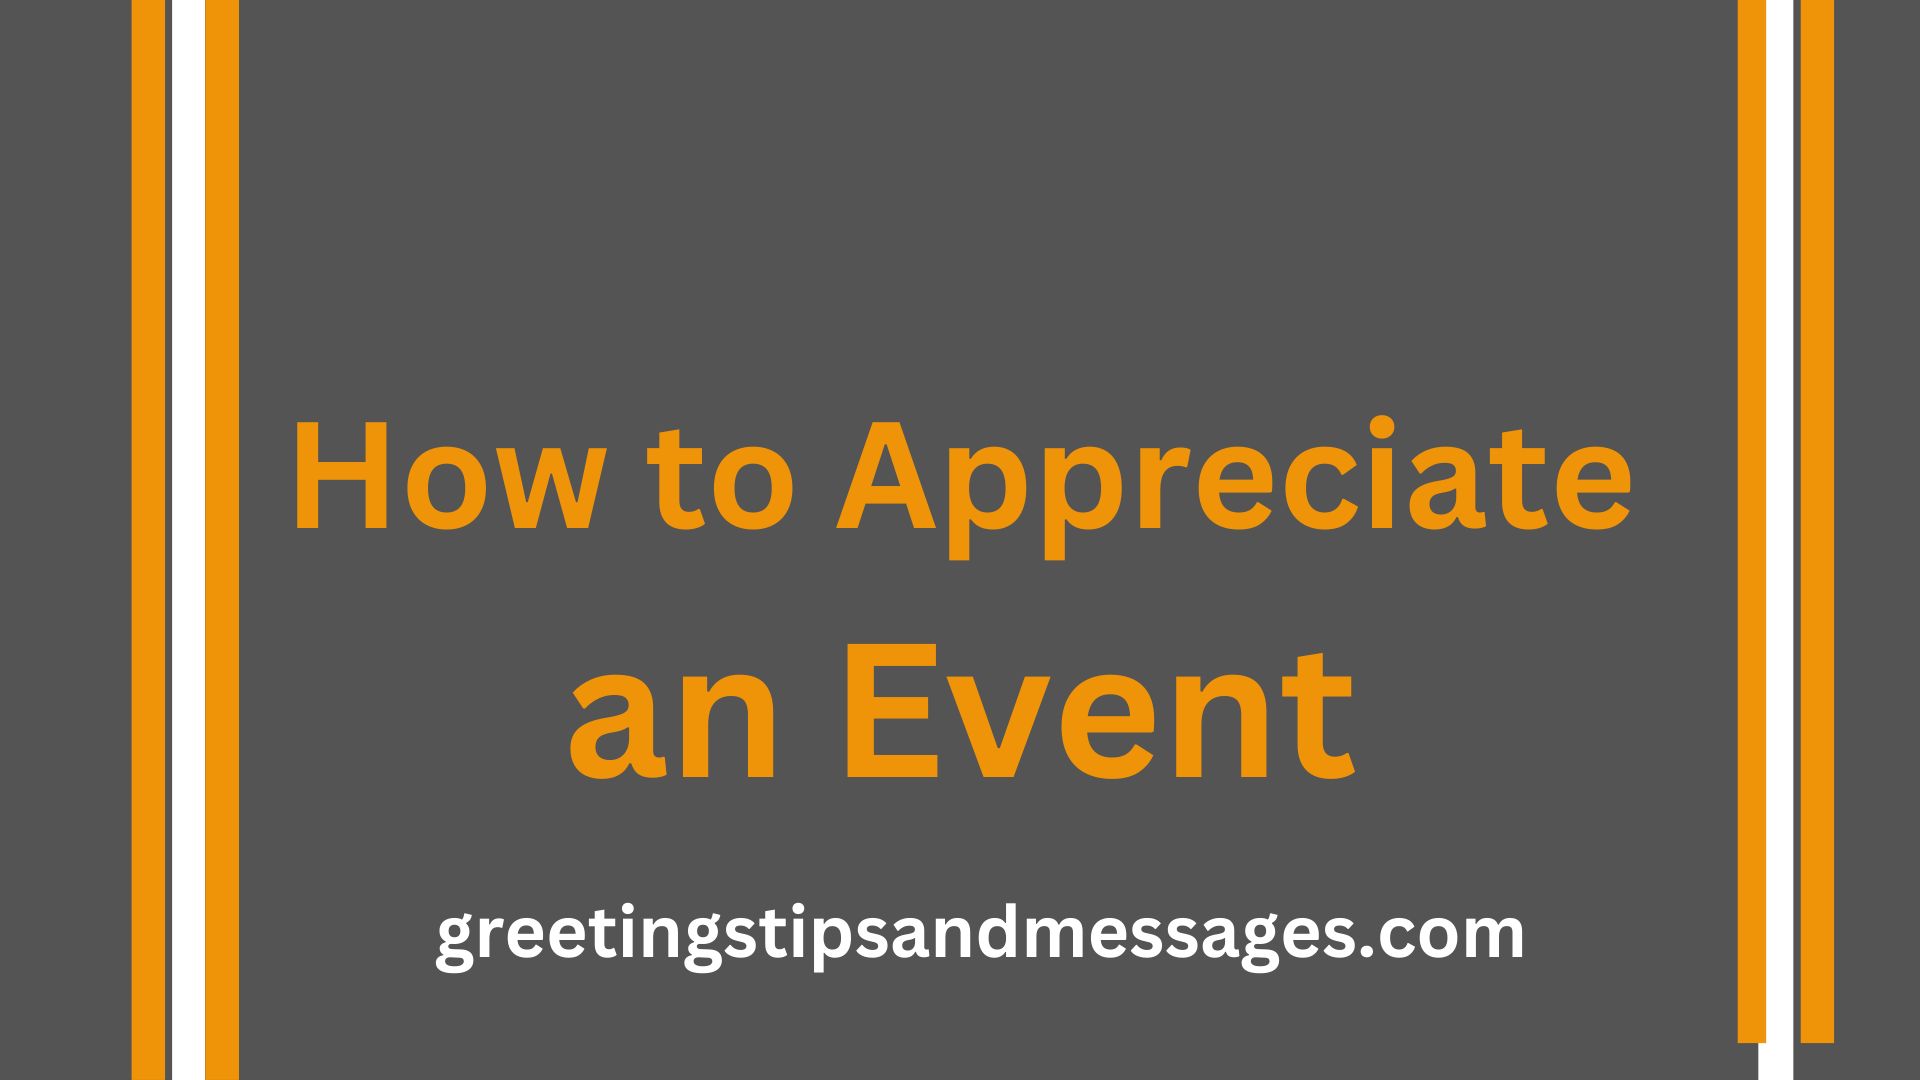 How to Appreciate an Event